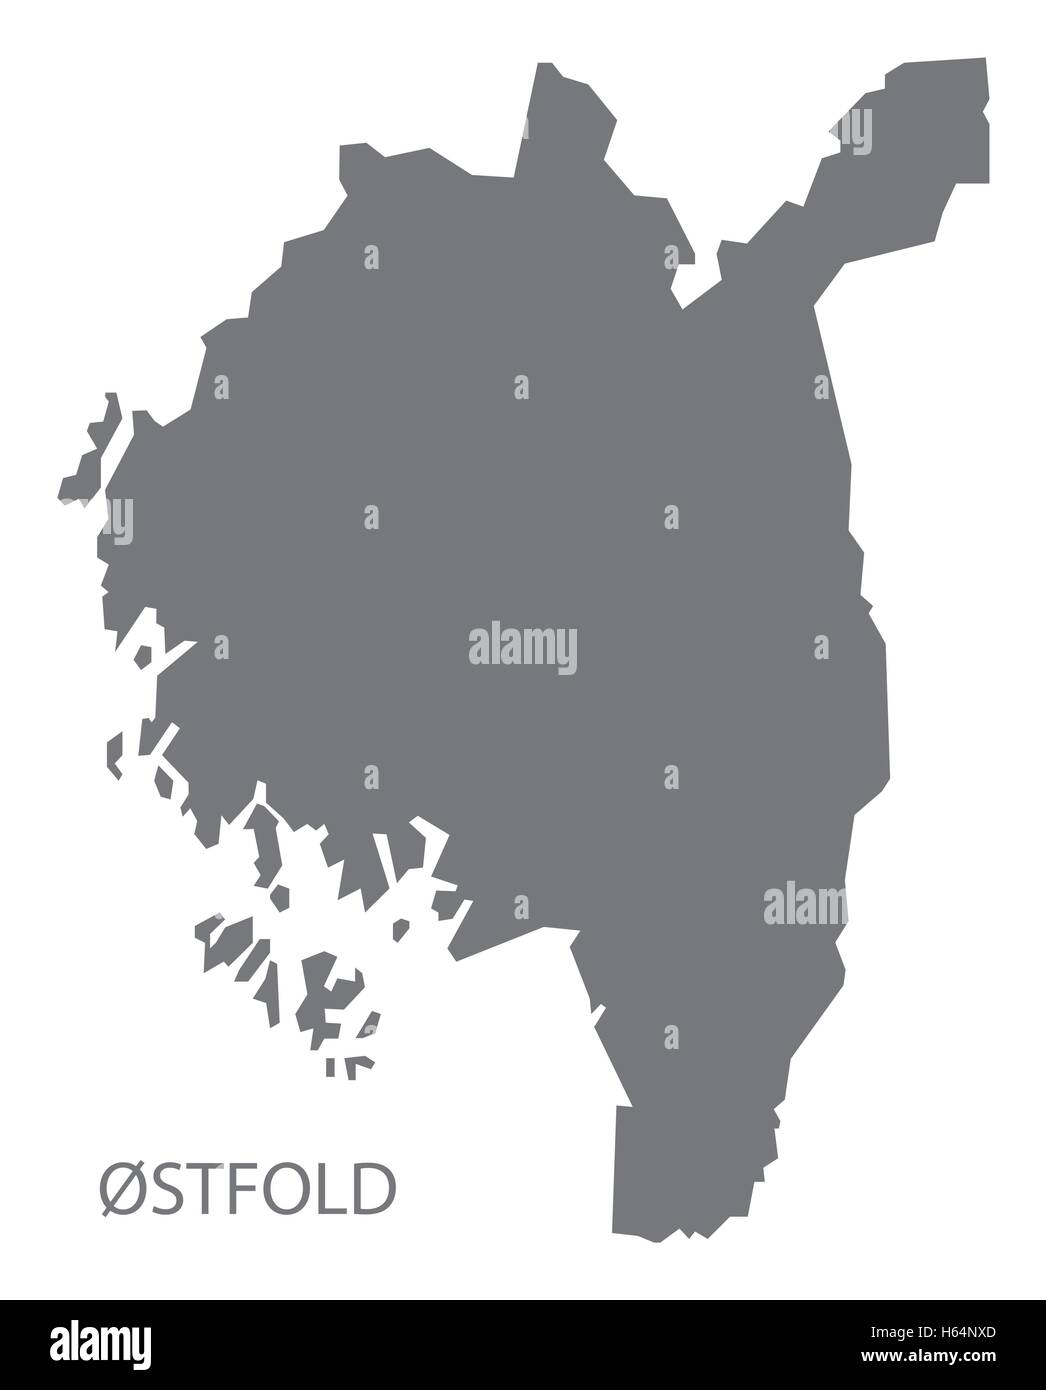 Ostfold Norway Map grey Stock Vector